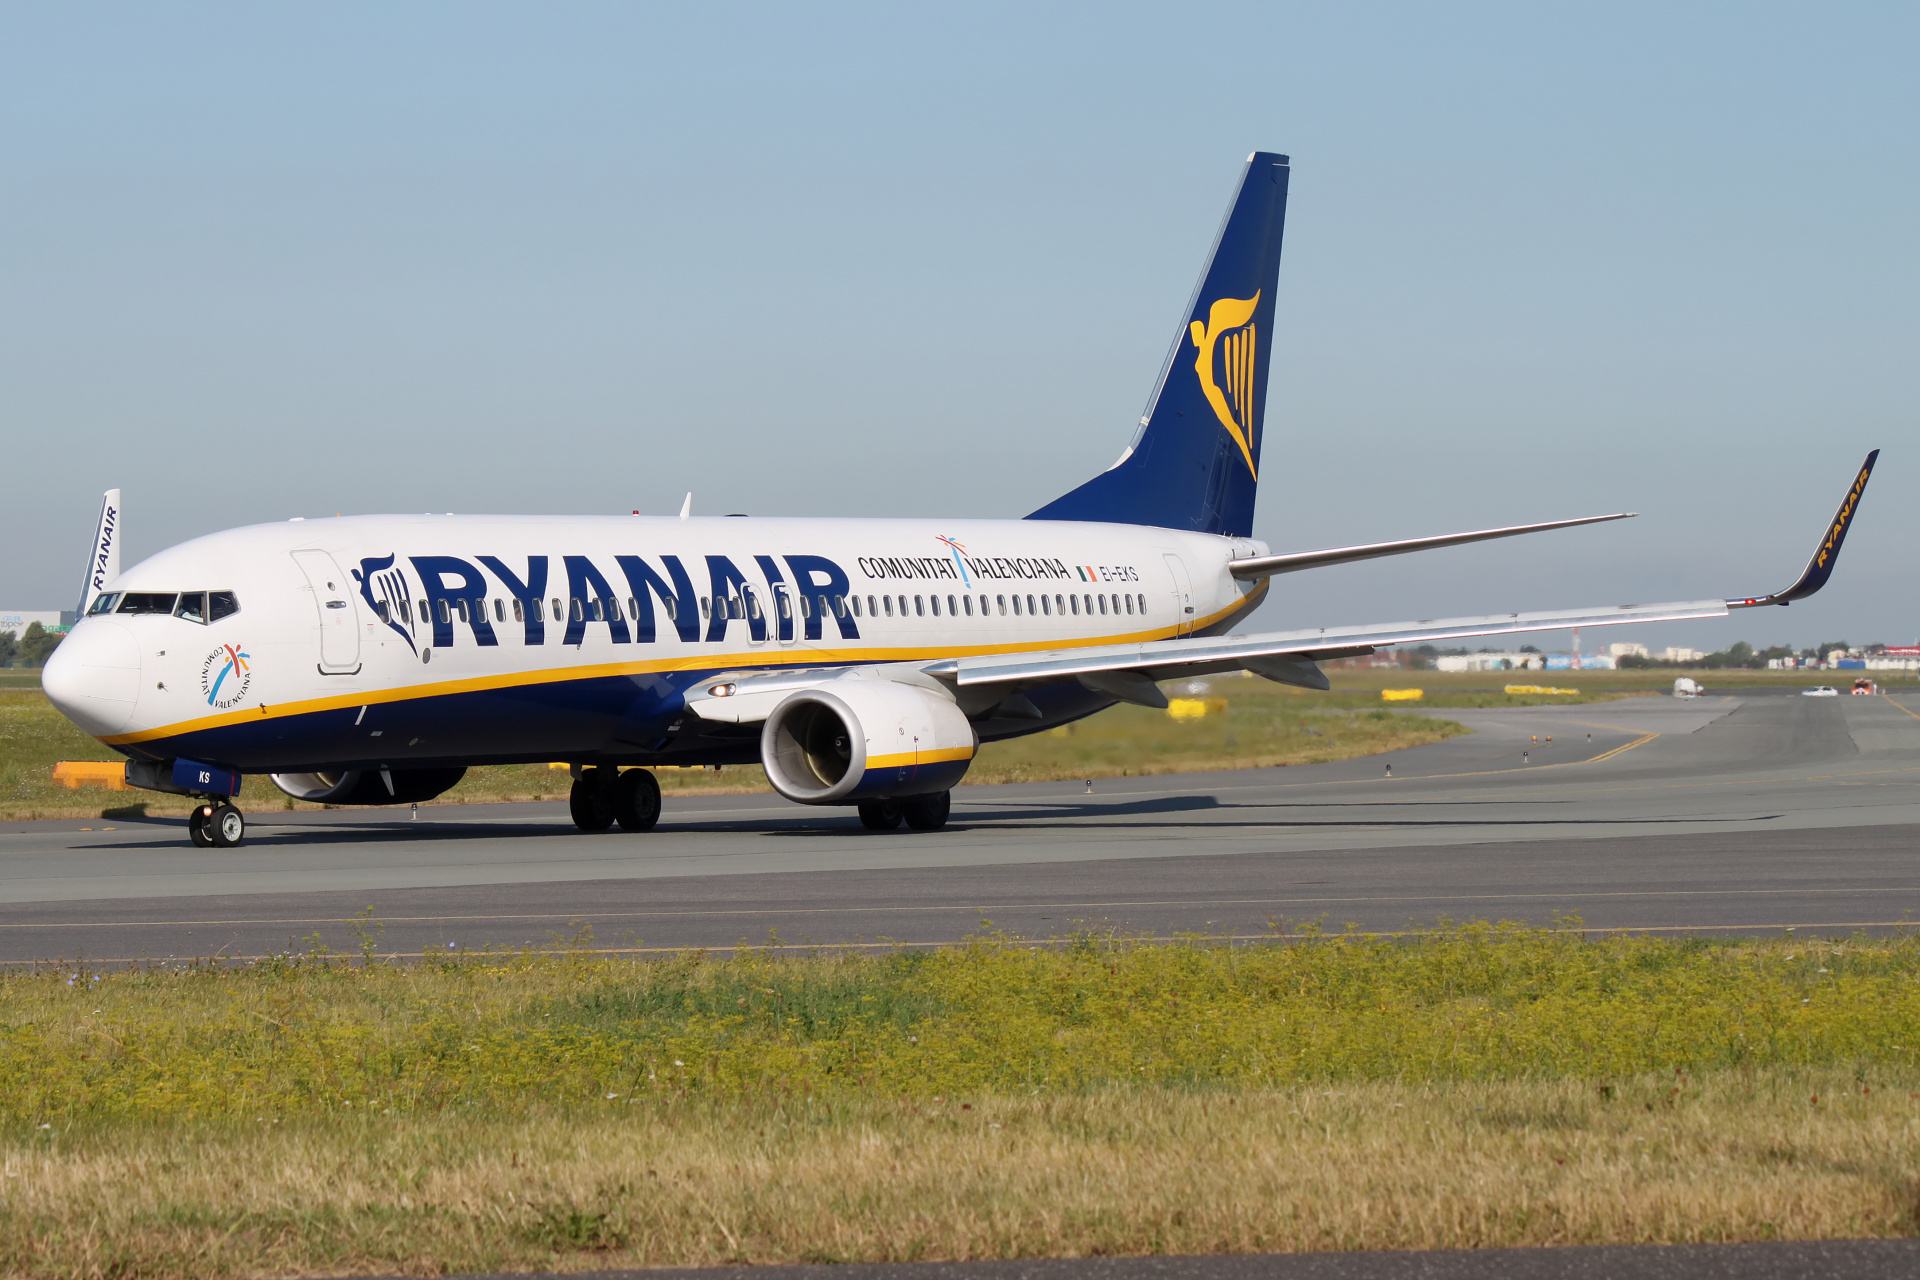 EI-EKS (Comunidad Valenciana sticker) (Aircraft » EPWA Spotting » Boeing 737-800 » Ryanair)